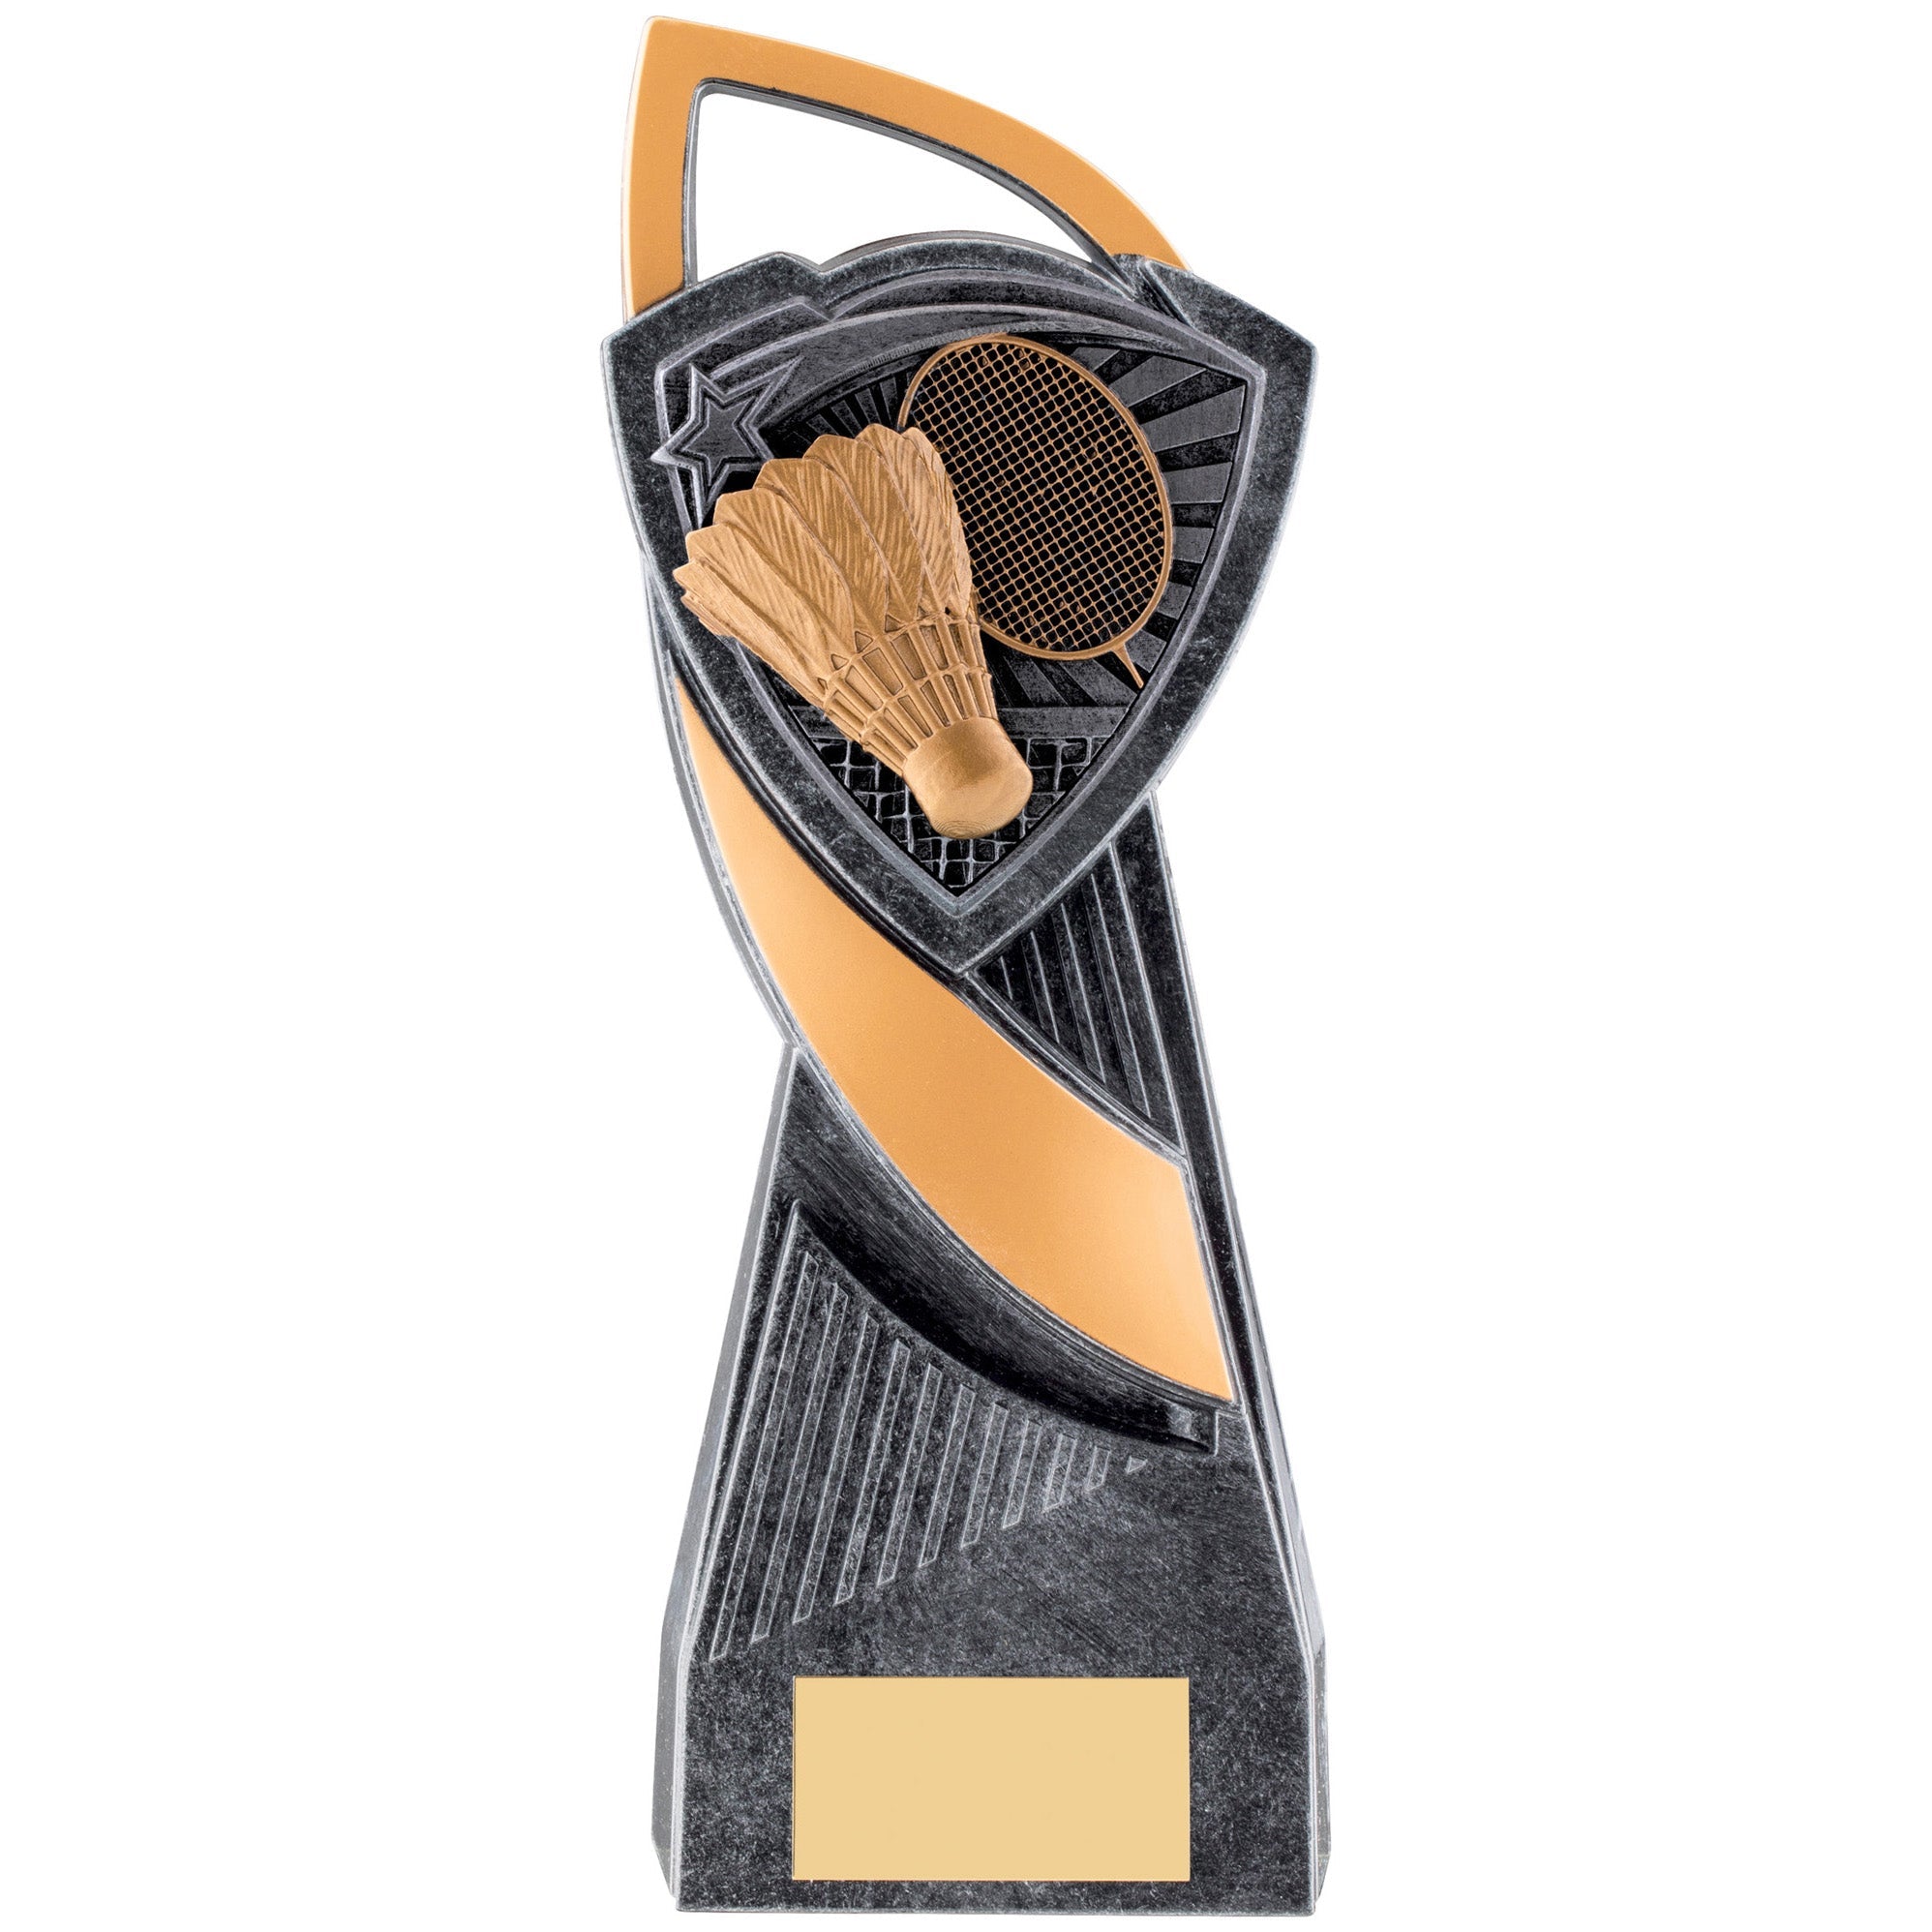 Utopia Badminton Trophy (Gold/Silver)